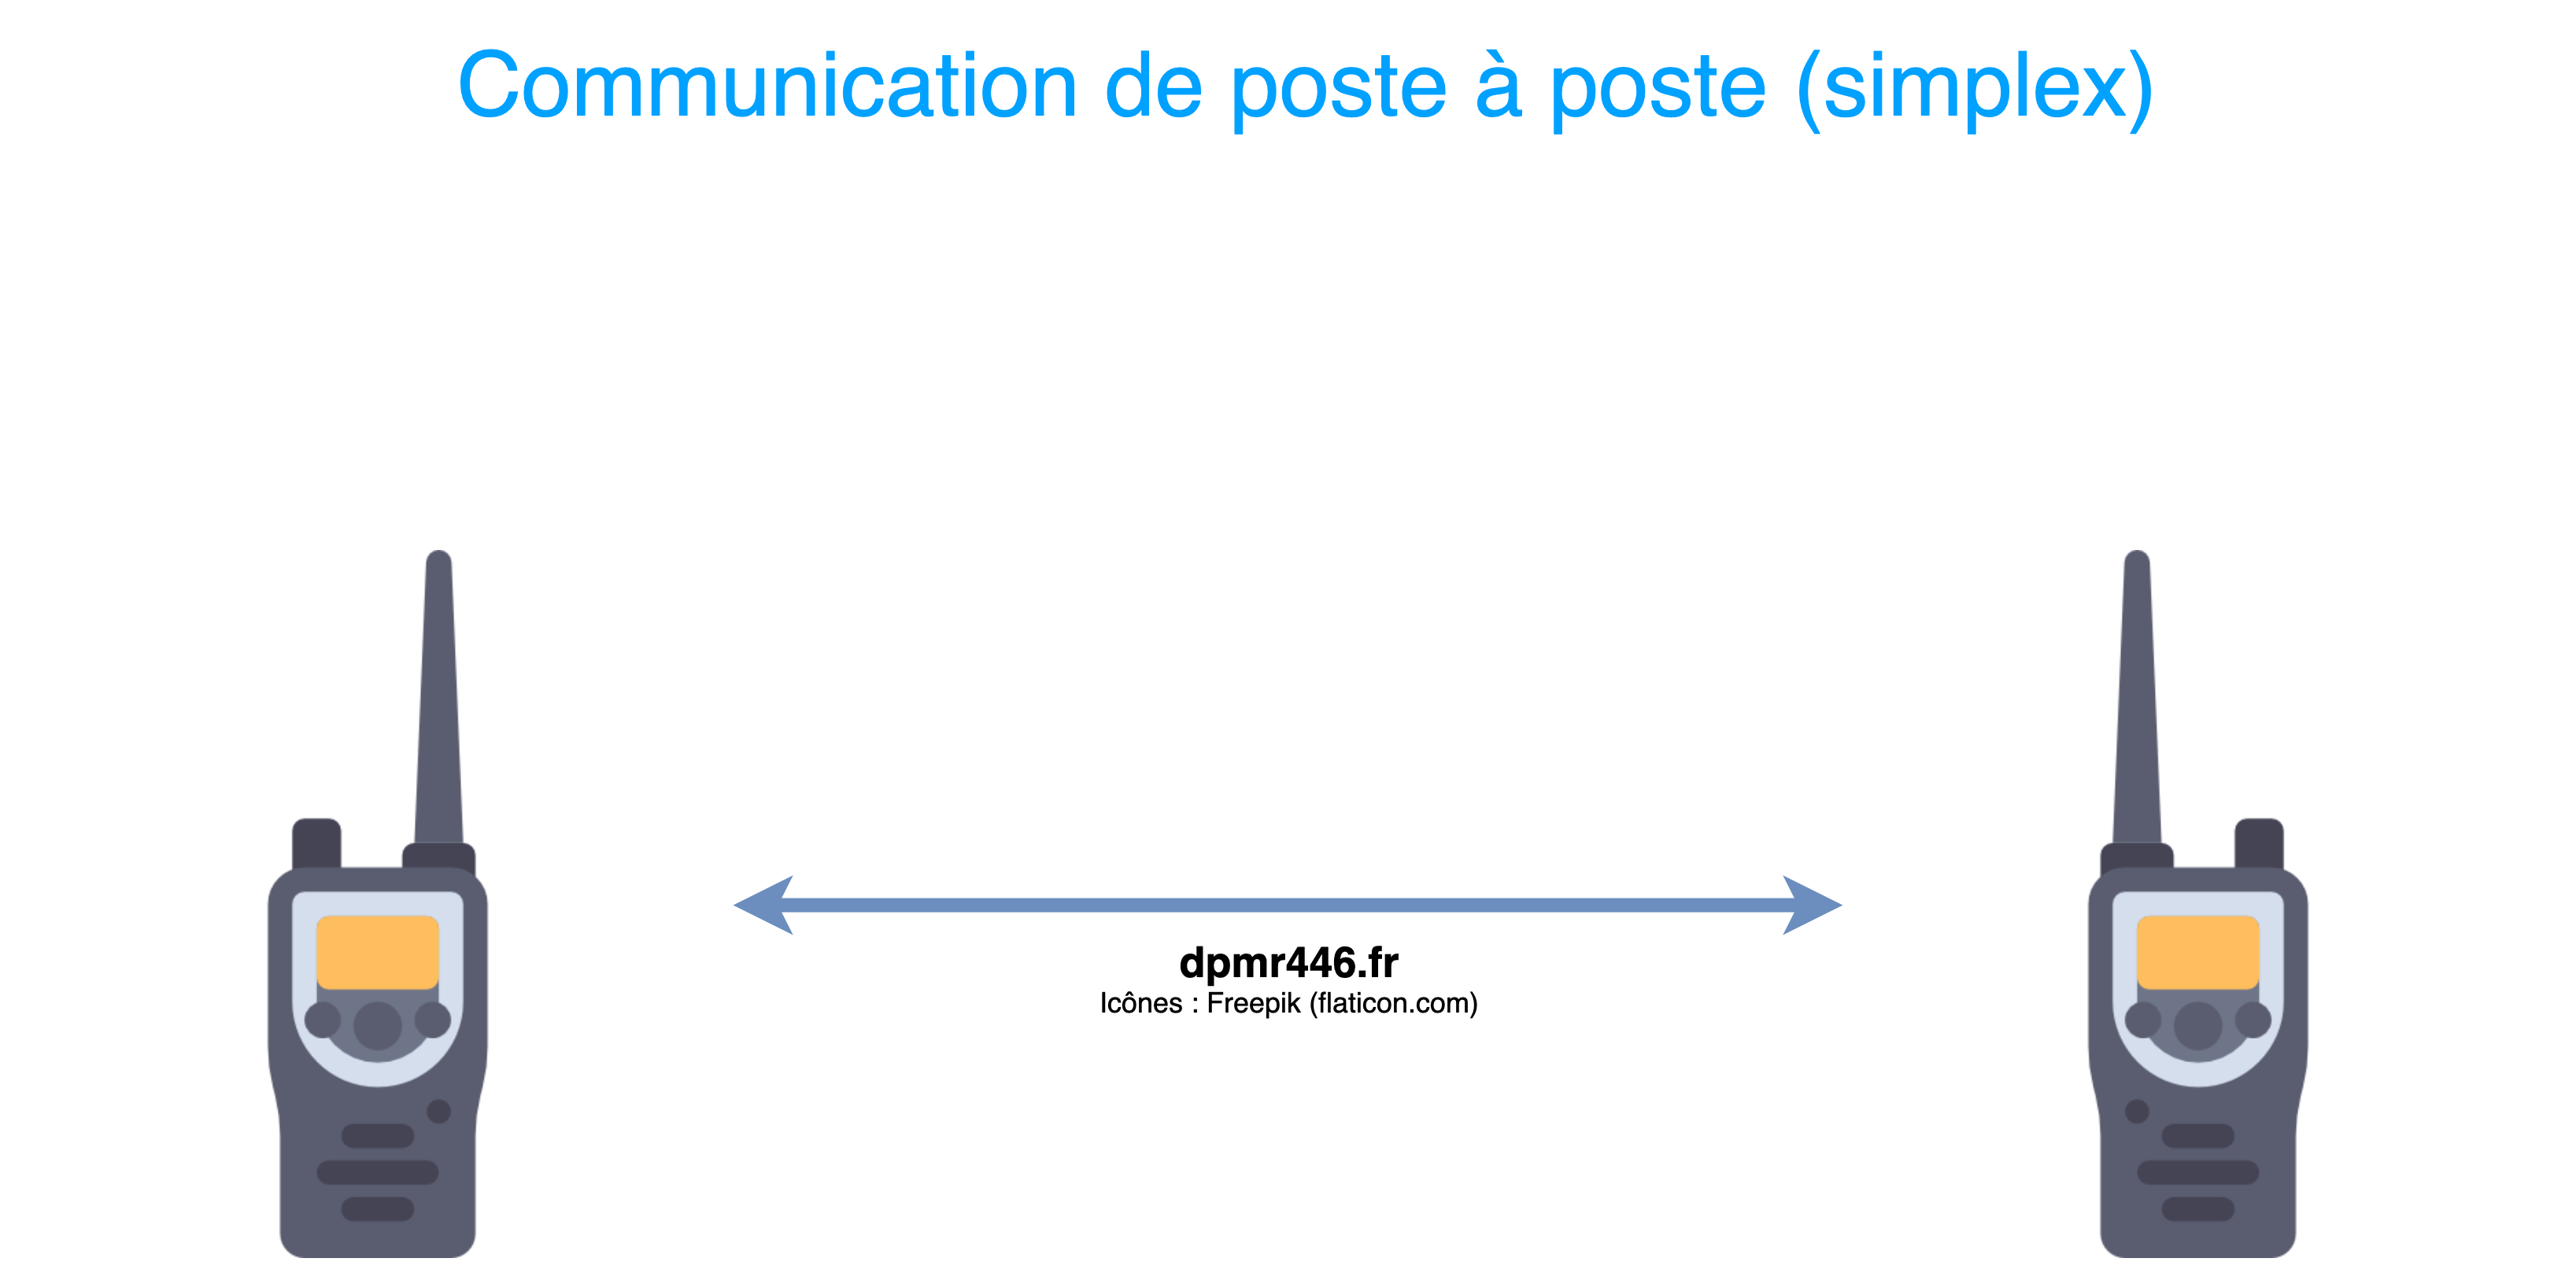 Communication simplex